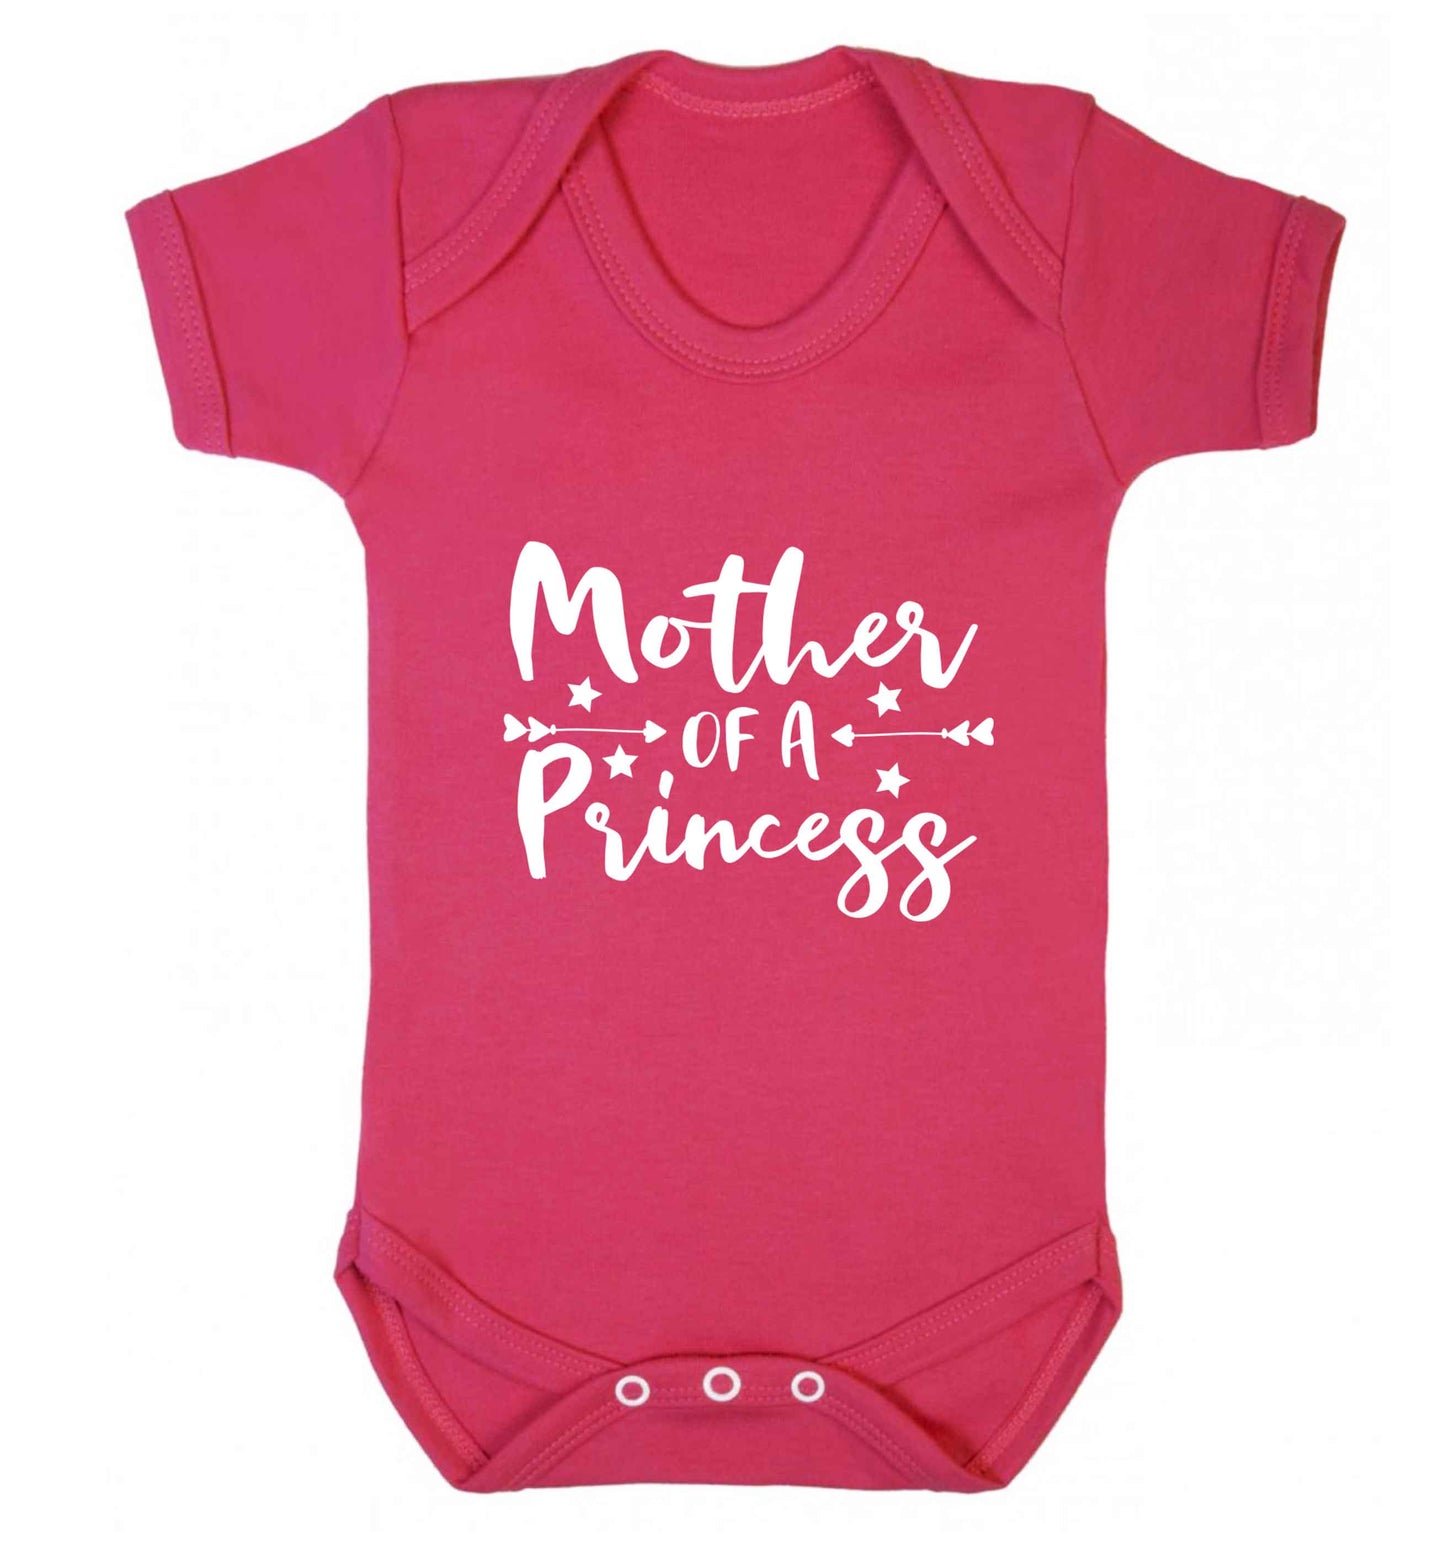 Mother of a princess baby vest dark pink 18-24 months